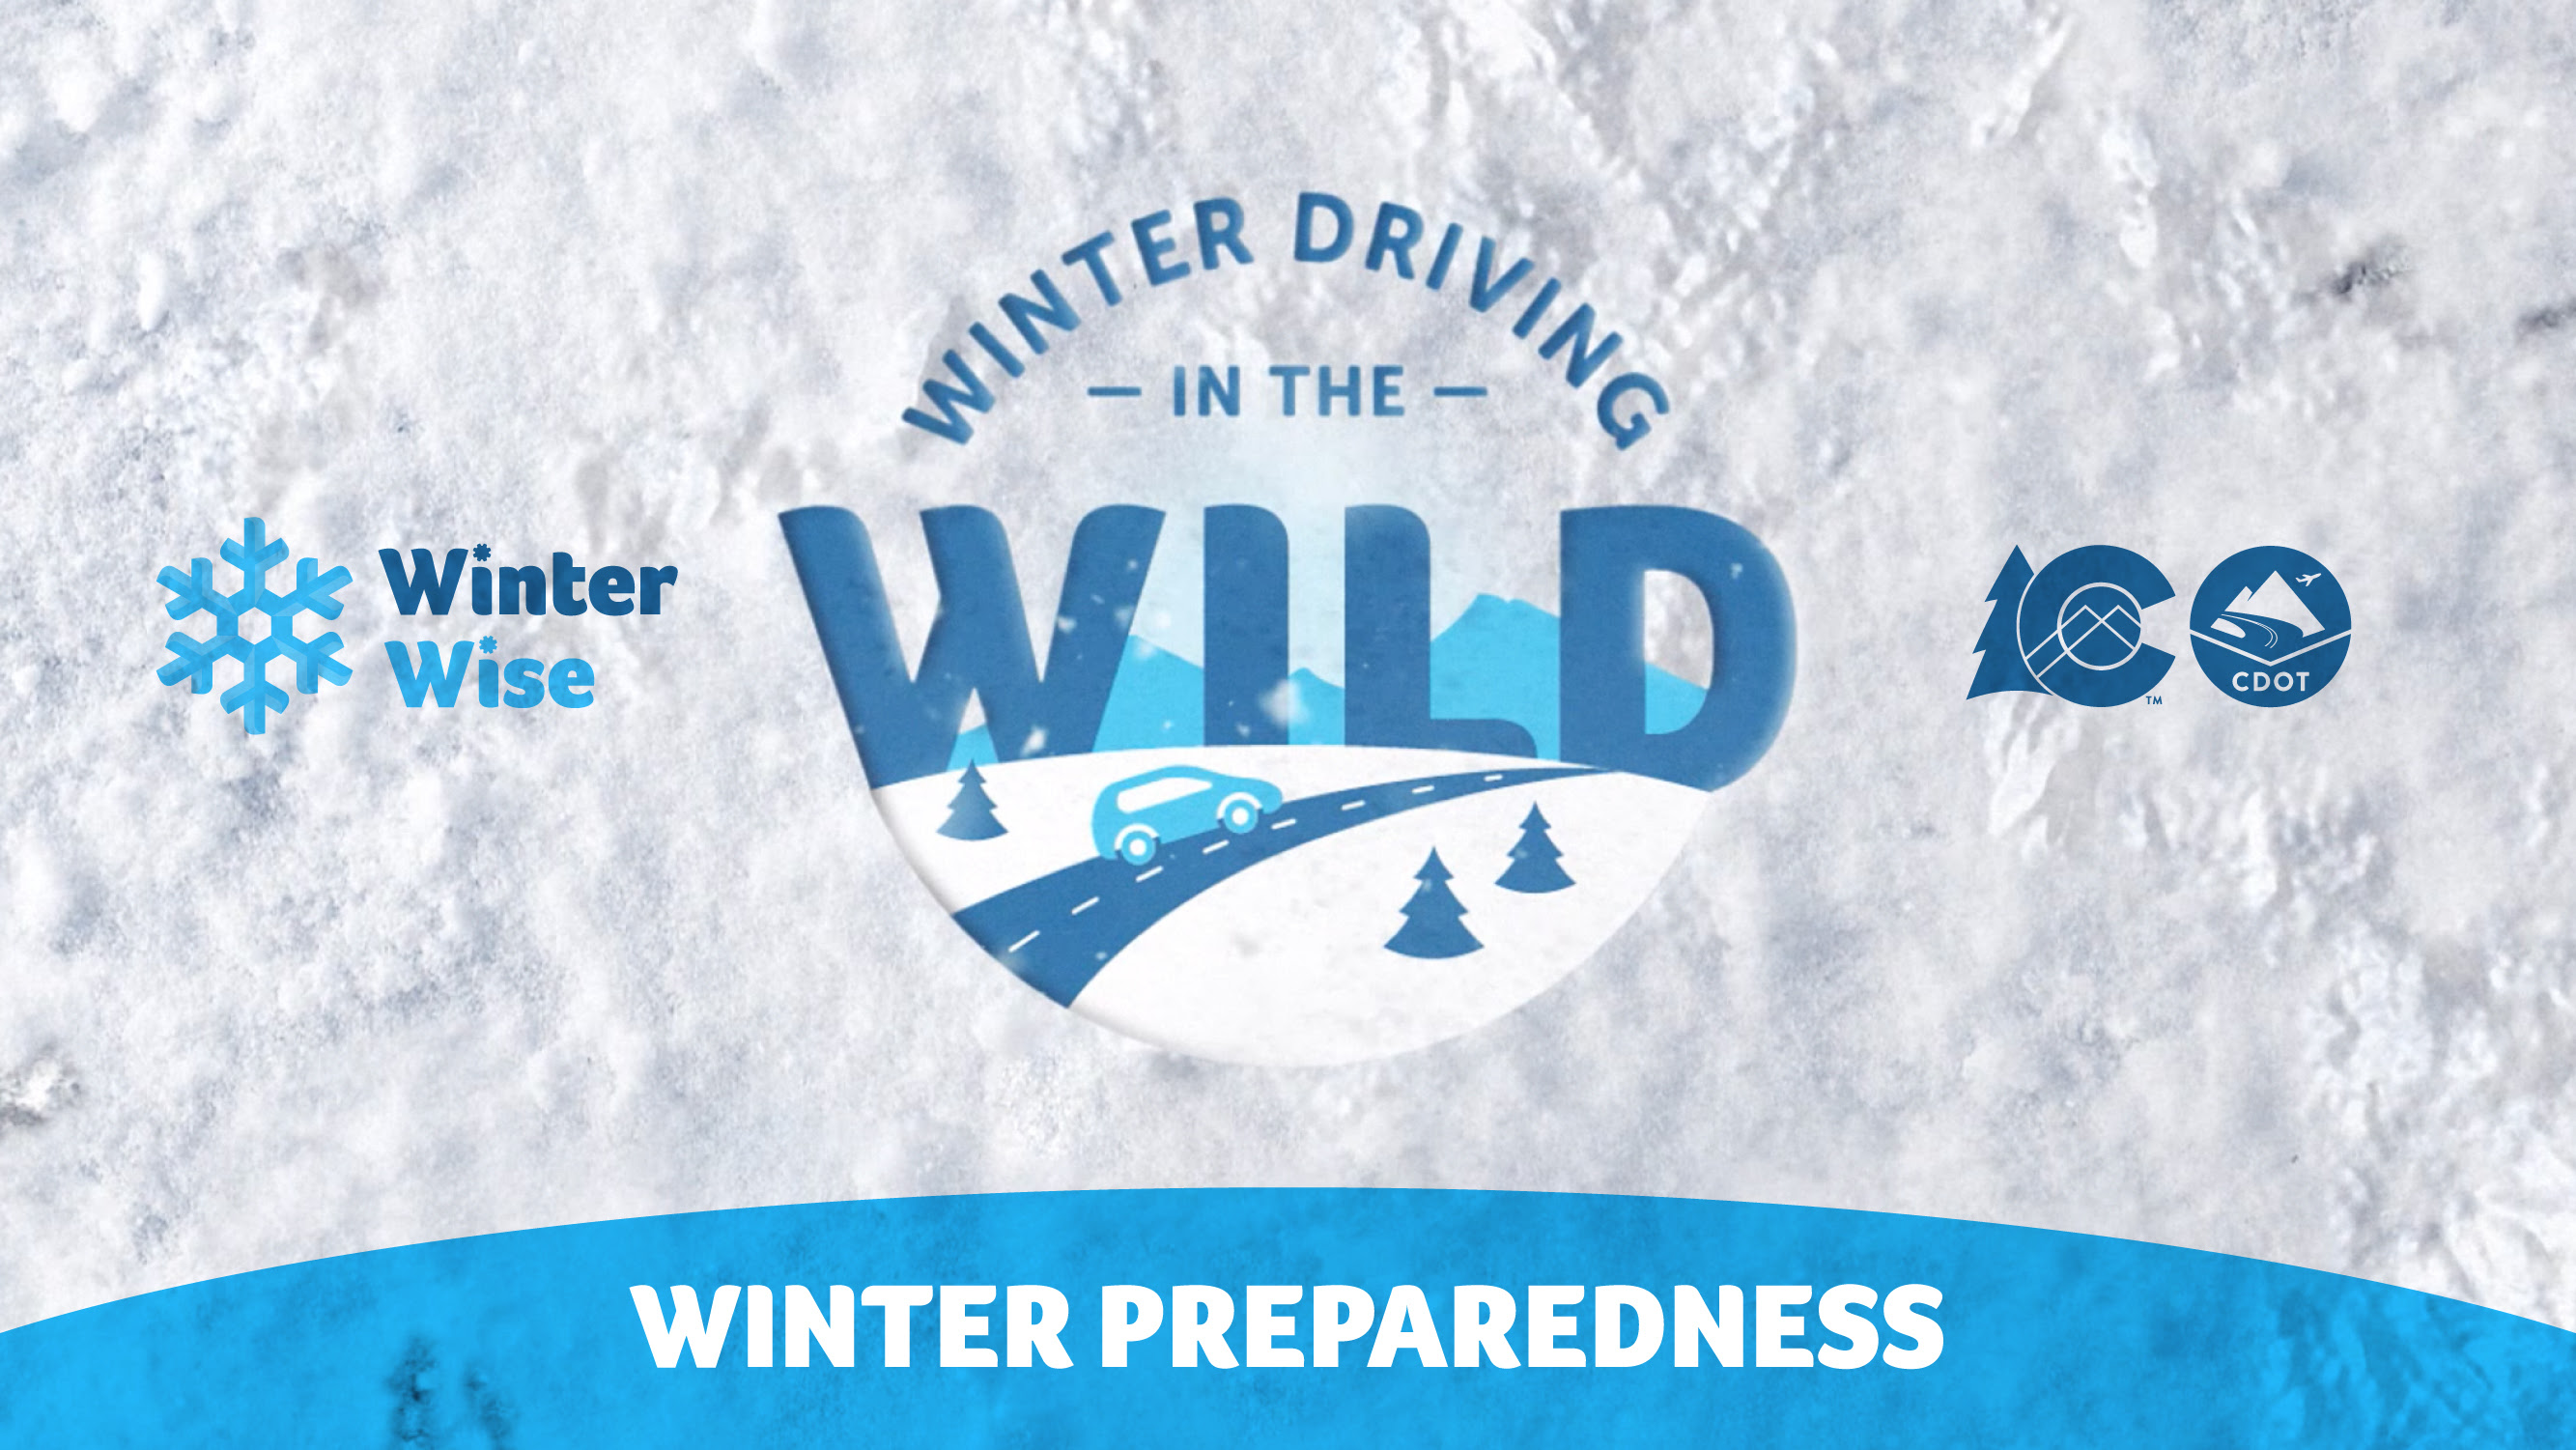 Winter Wise - Winter Driving in the Wild - Winter Preparedness detail image